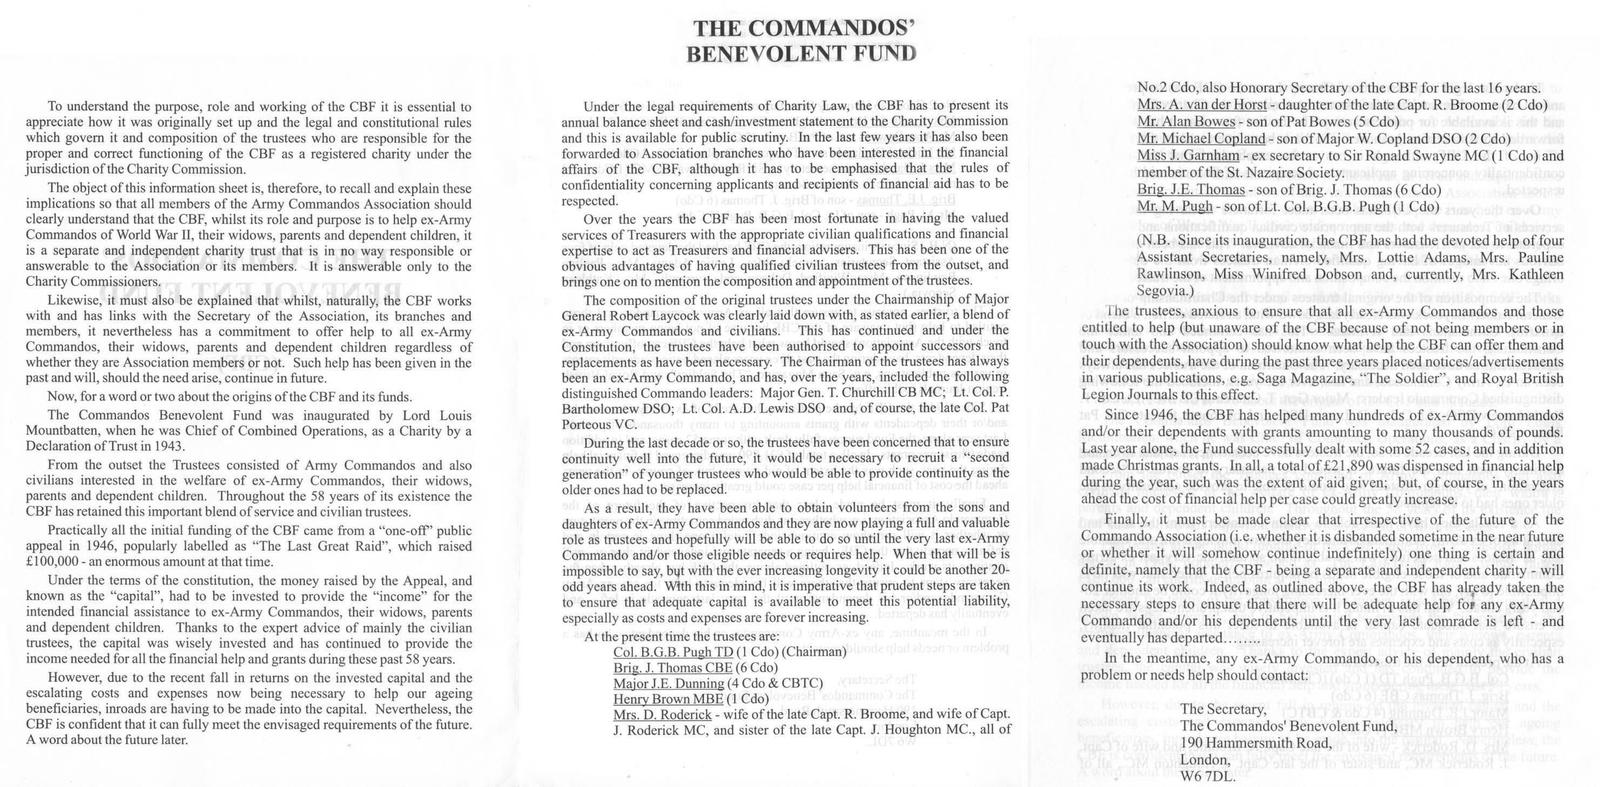 History of the Commandos' Benevolent Fund (CBF)